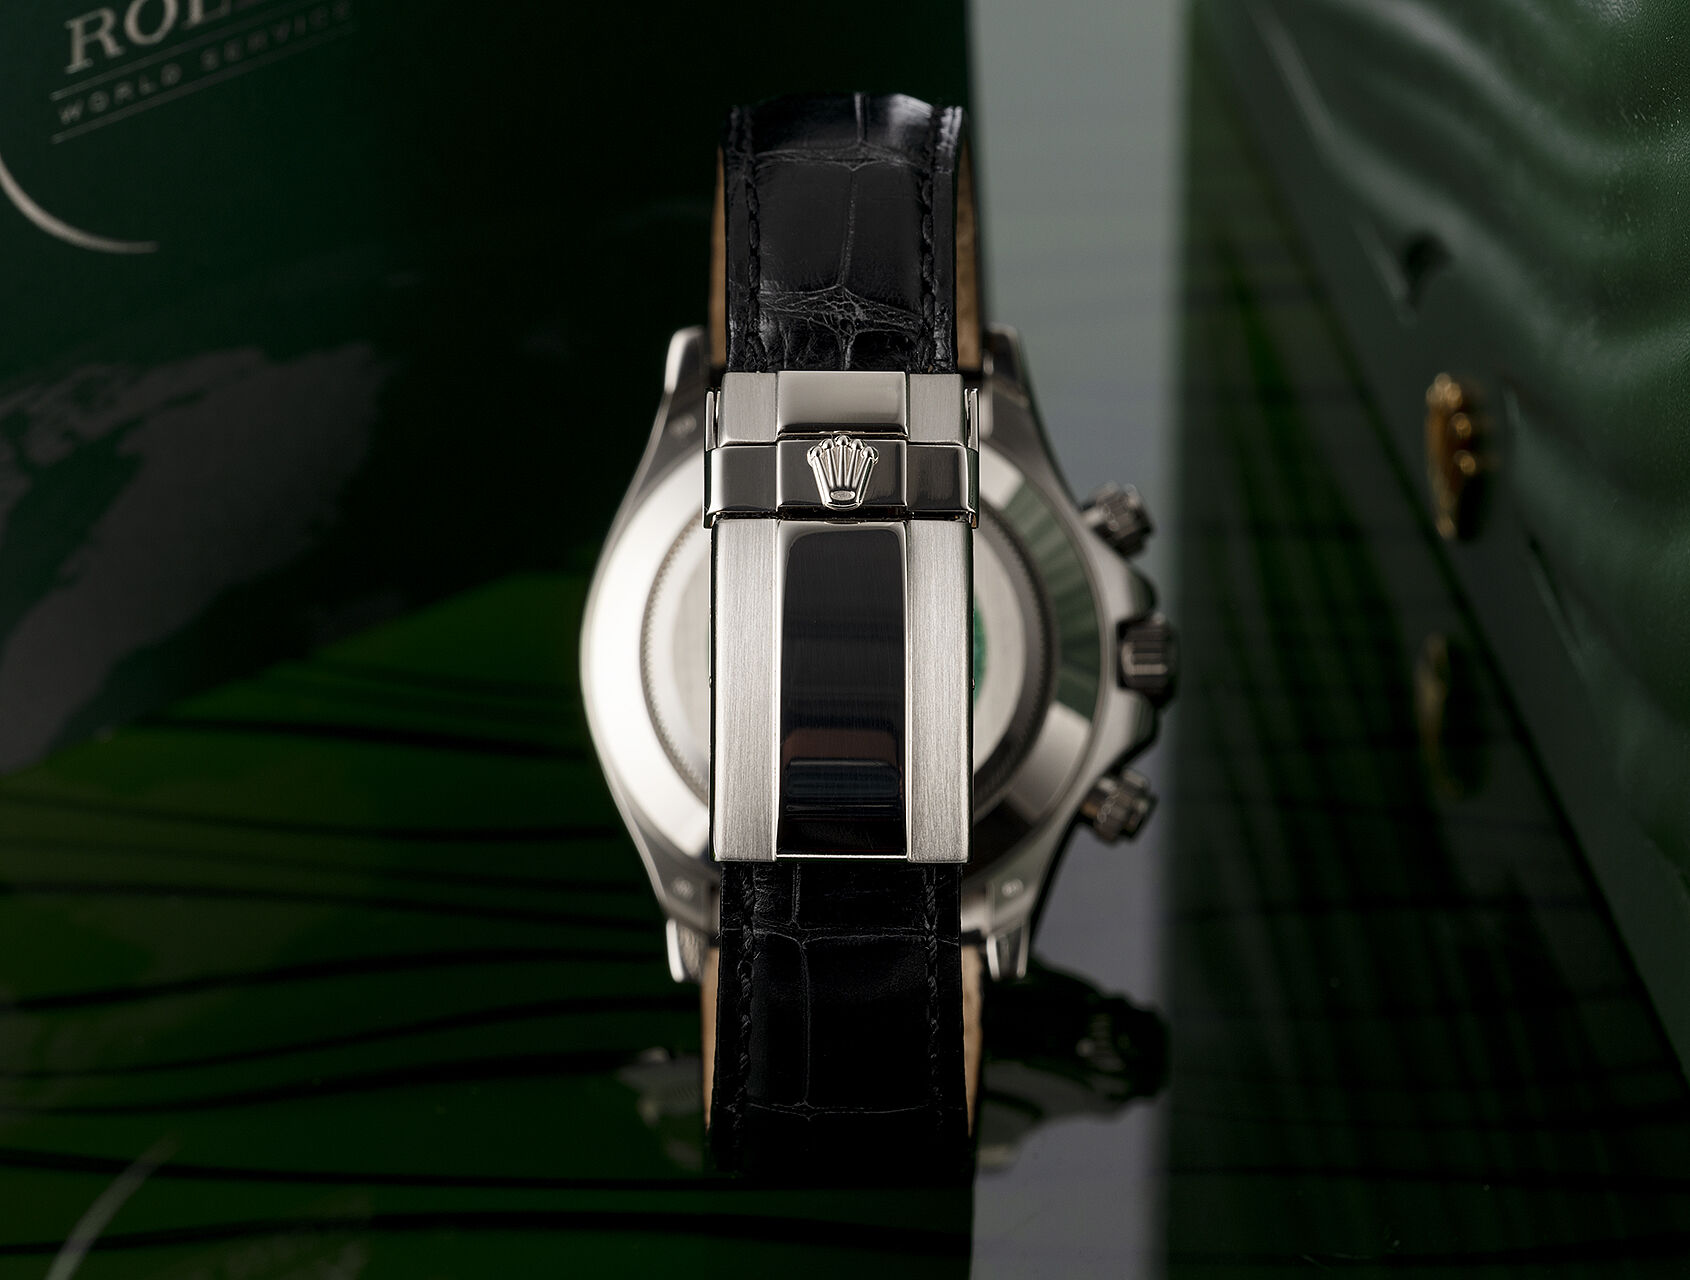 ref 116519 | 116519 - Rolex Warranty to 2023 | Rolex Cosmograph Daytona